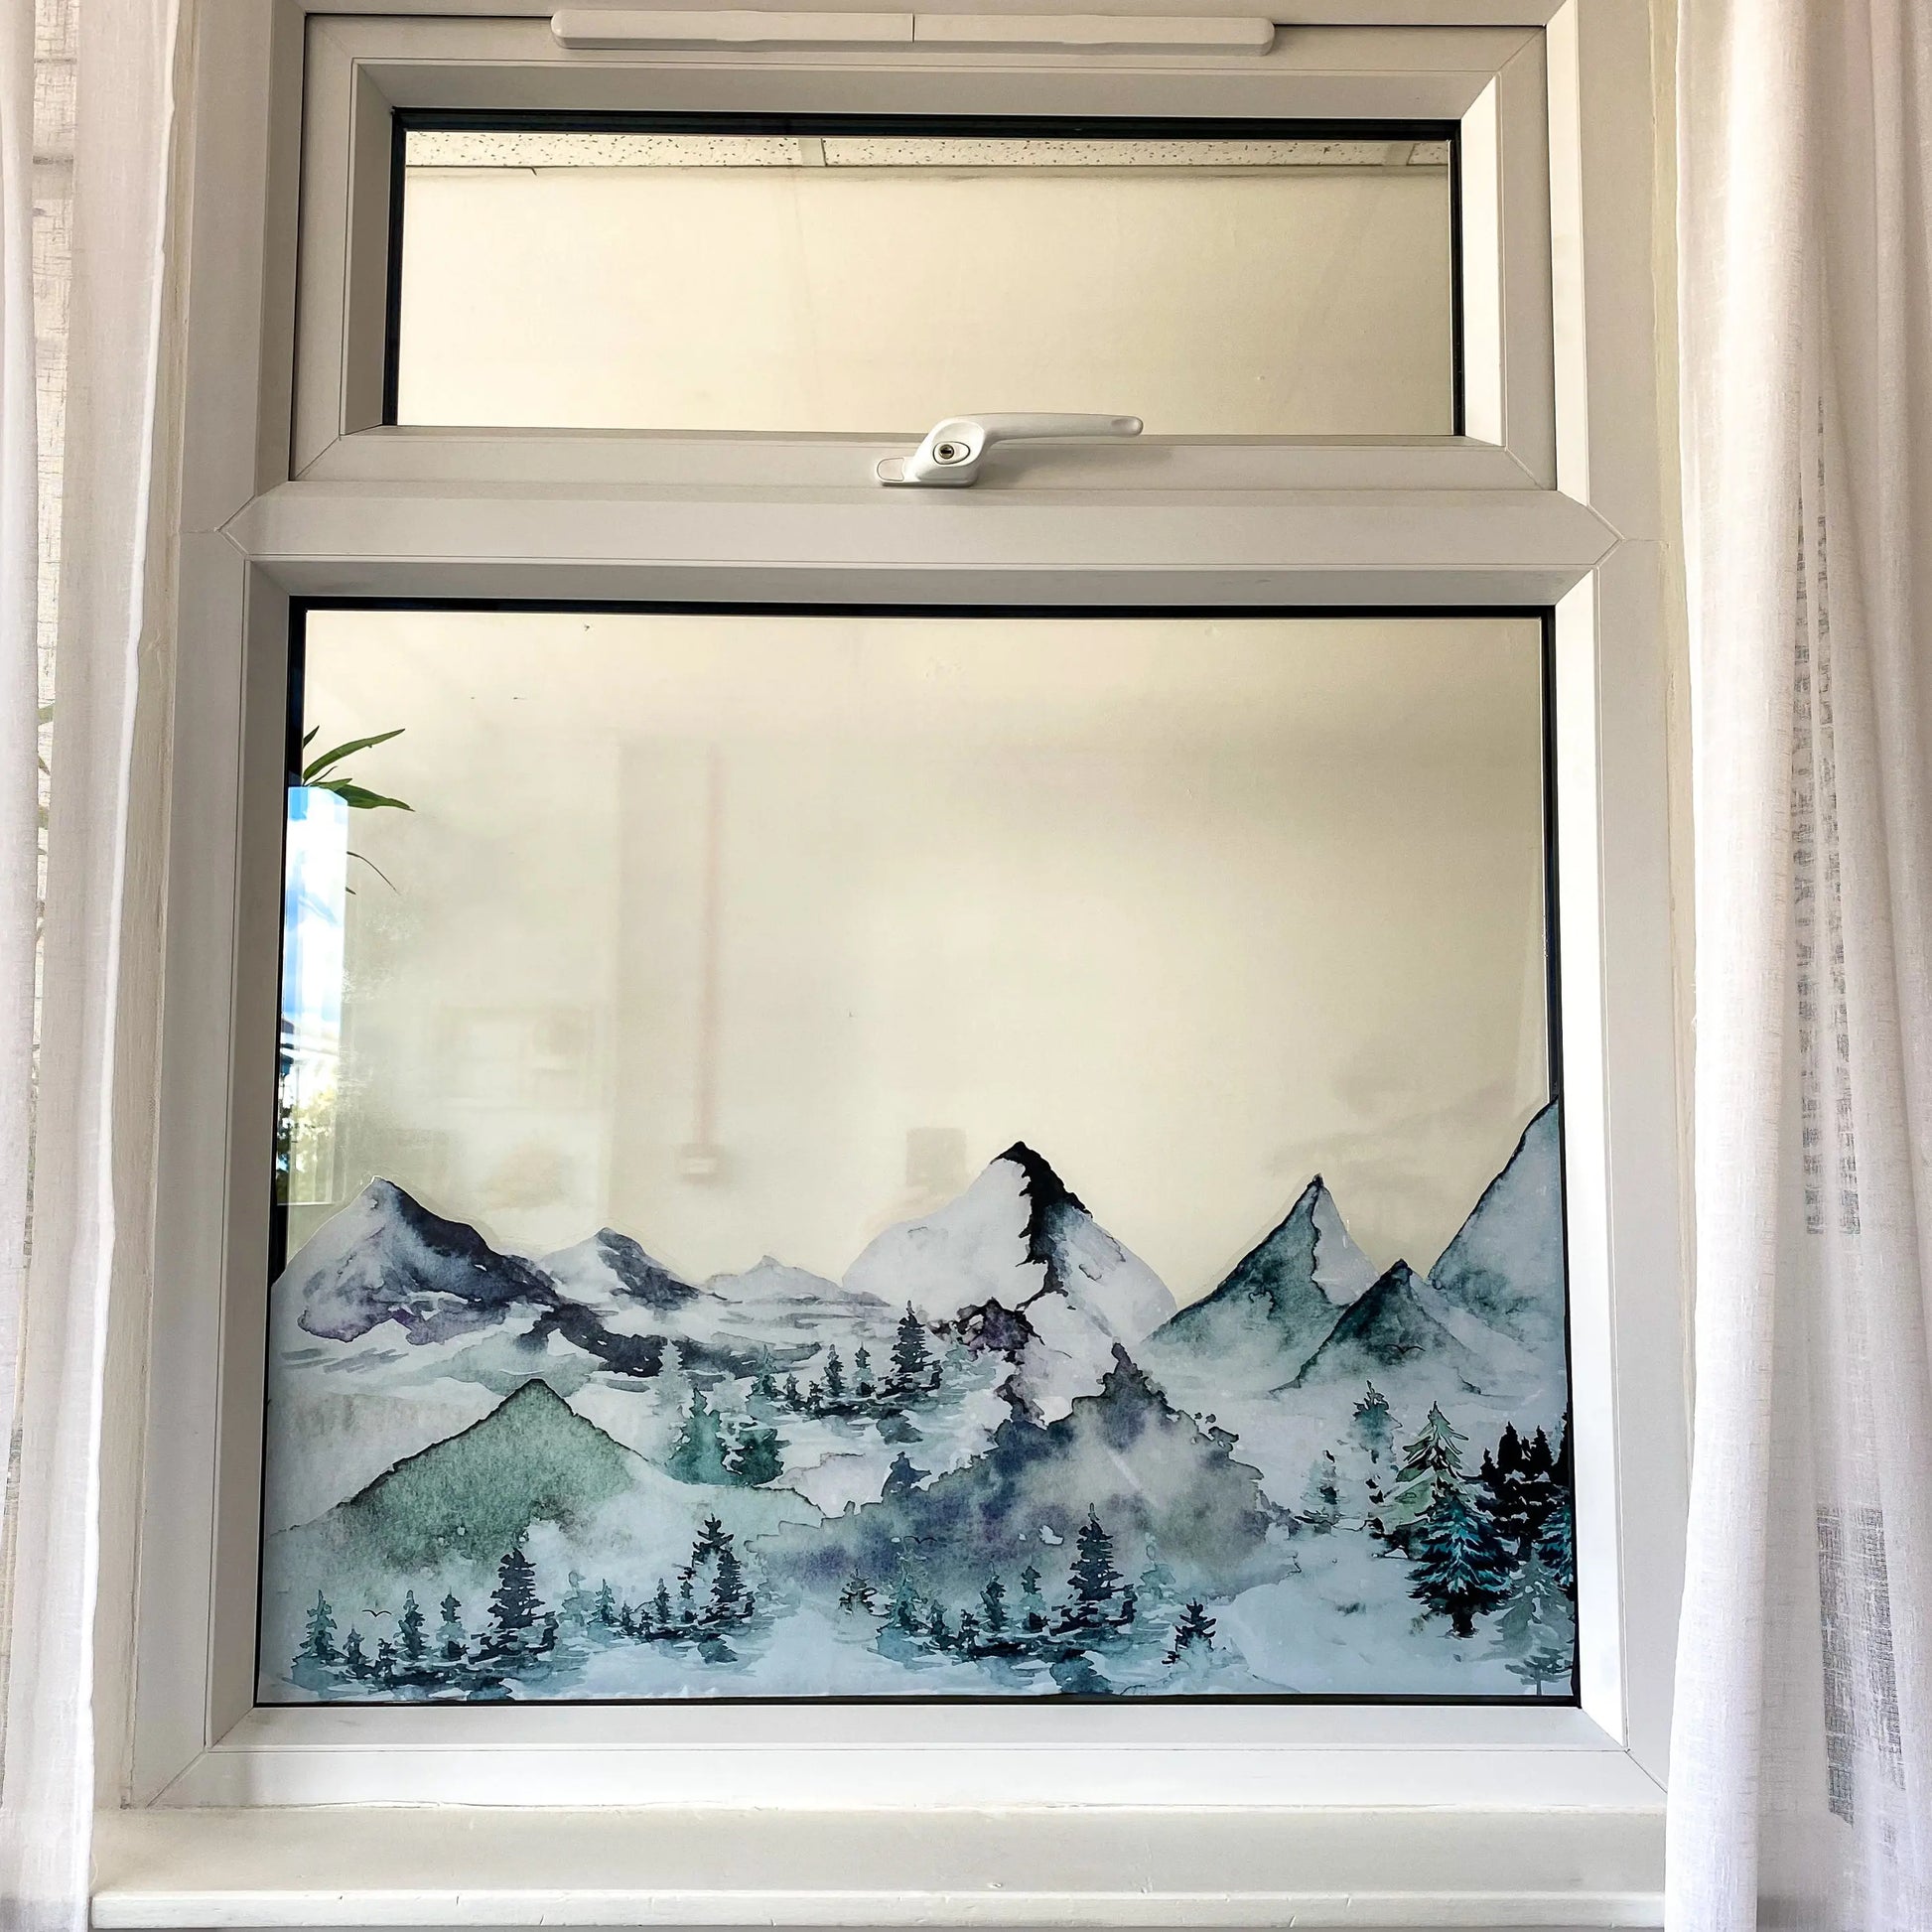 Decal Winter Forest Mountain Window Border Dizzy Duck Designs